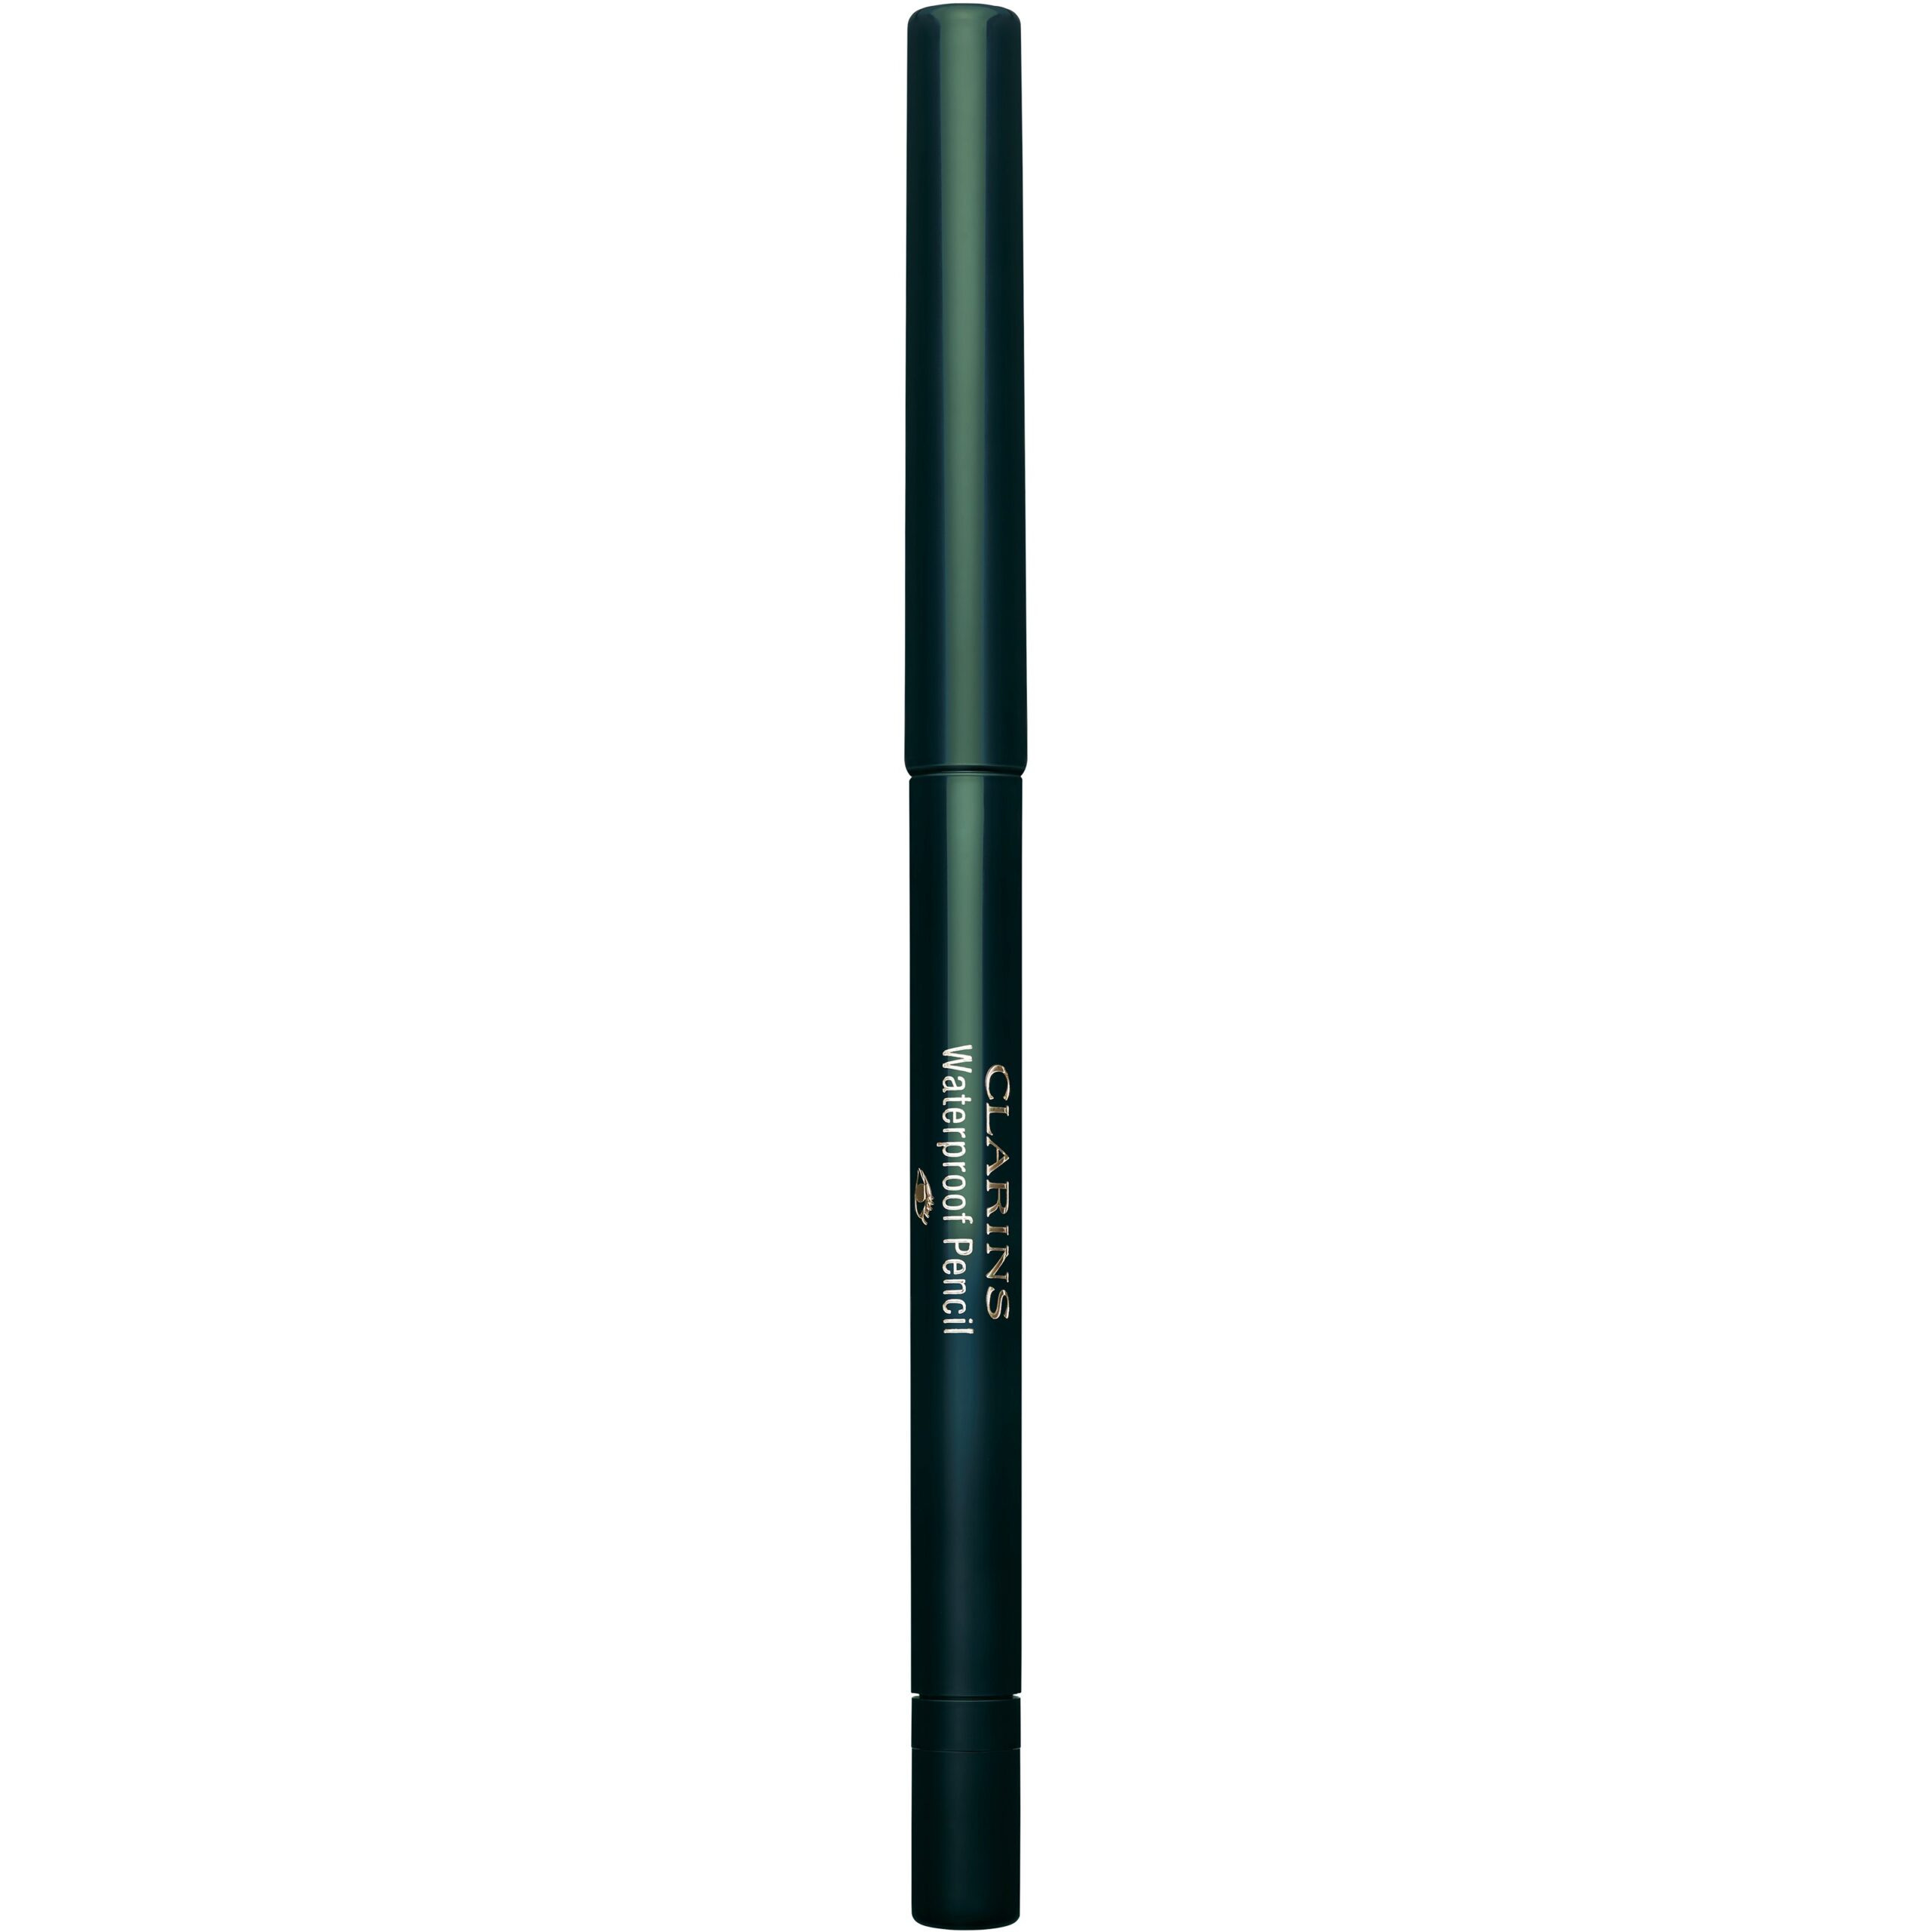 Clarins Waterproof Eye Pencil 05 Forest